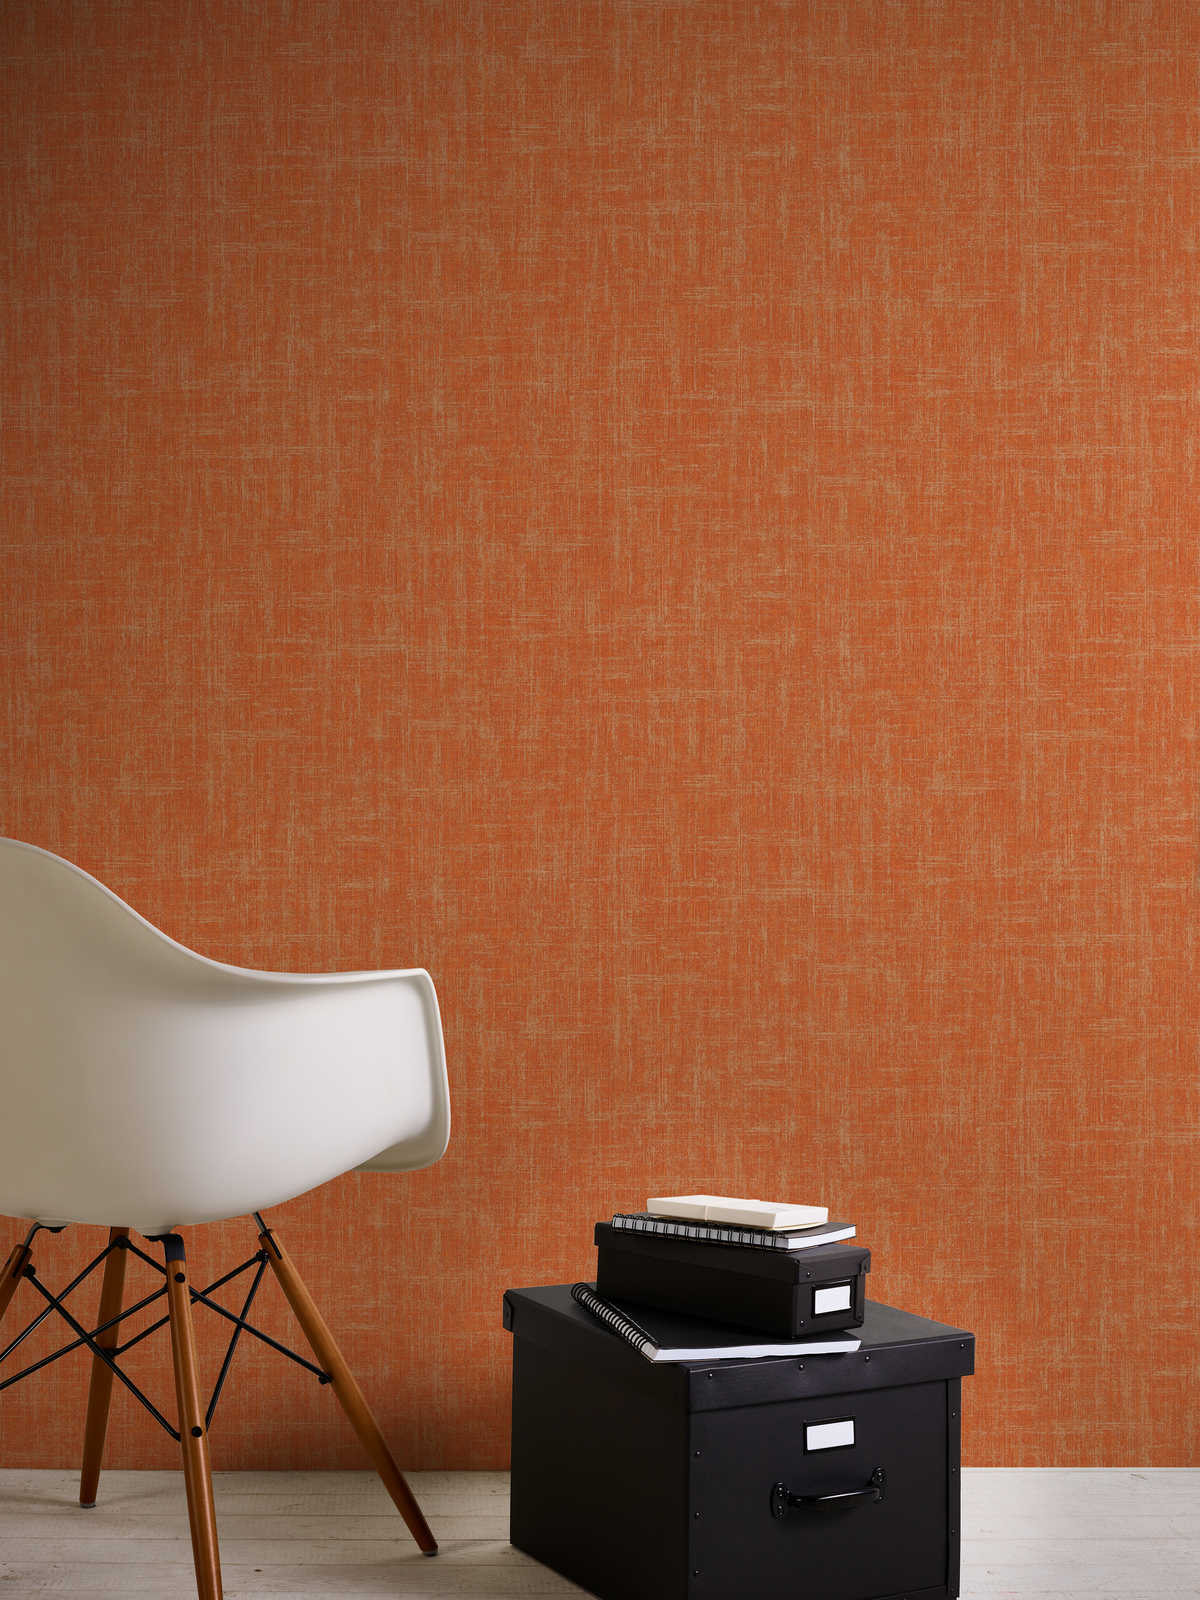             Papel pintado naranja con diseño de textura de lino
        